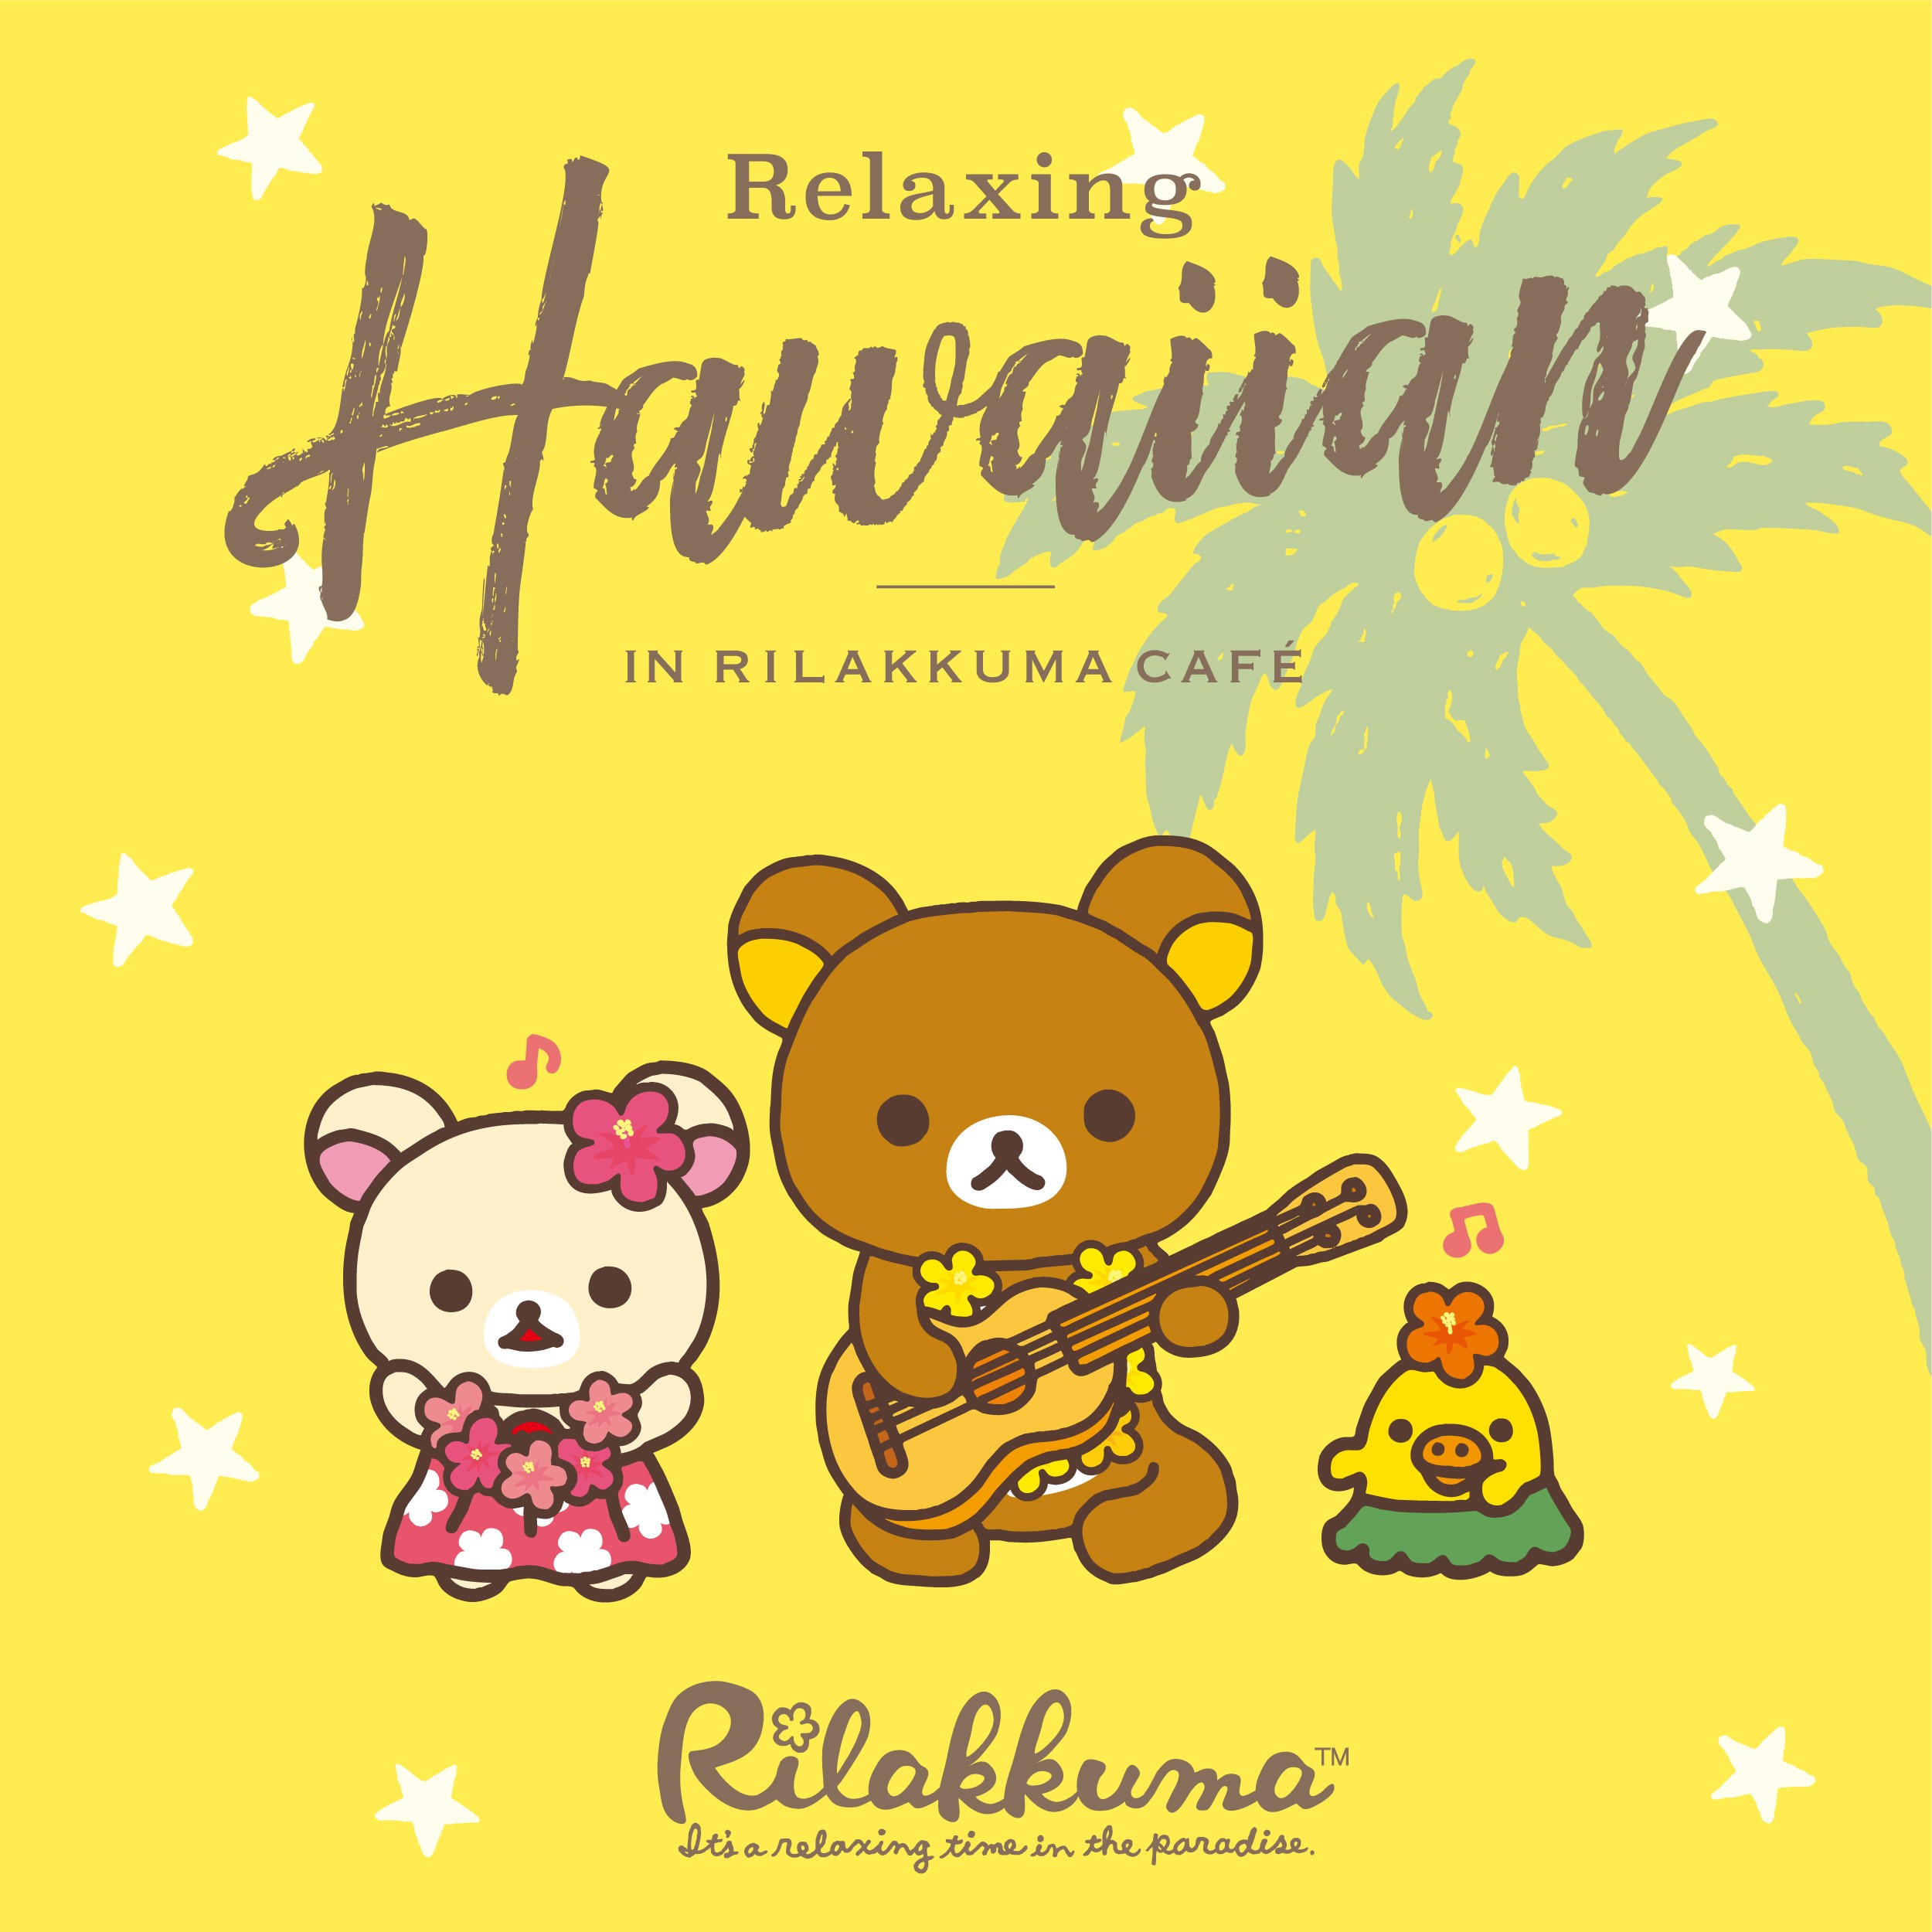 IMWCD1123_Relaxing Hawaiian in Rilakkuma Cafe_JKT_0713.jpg